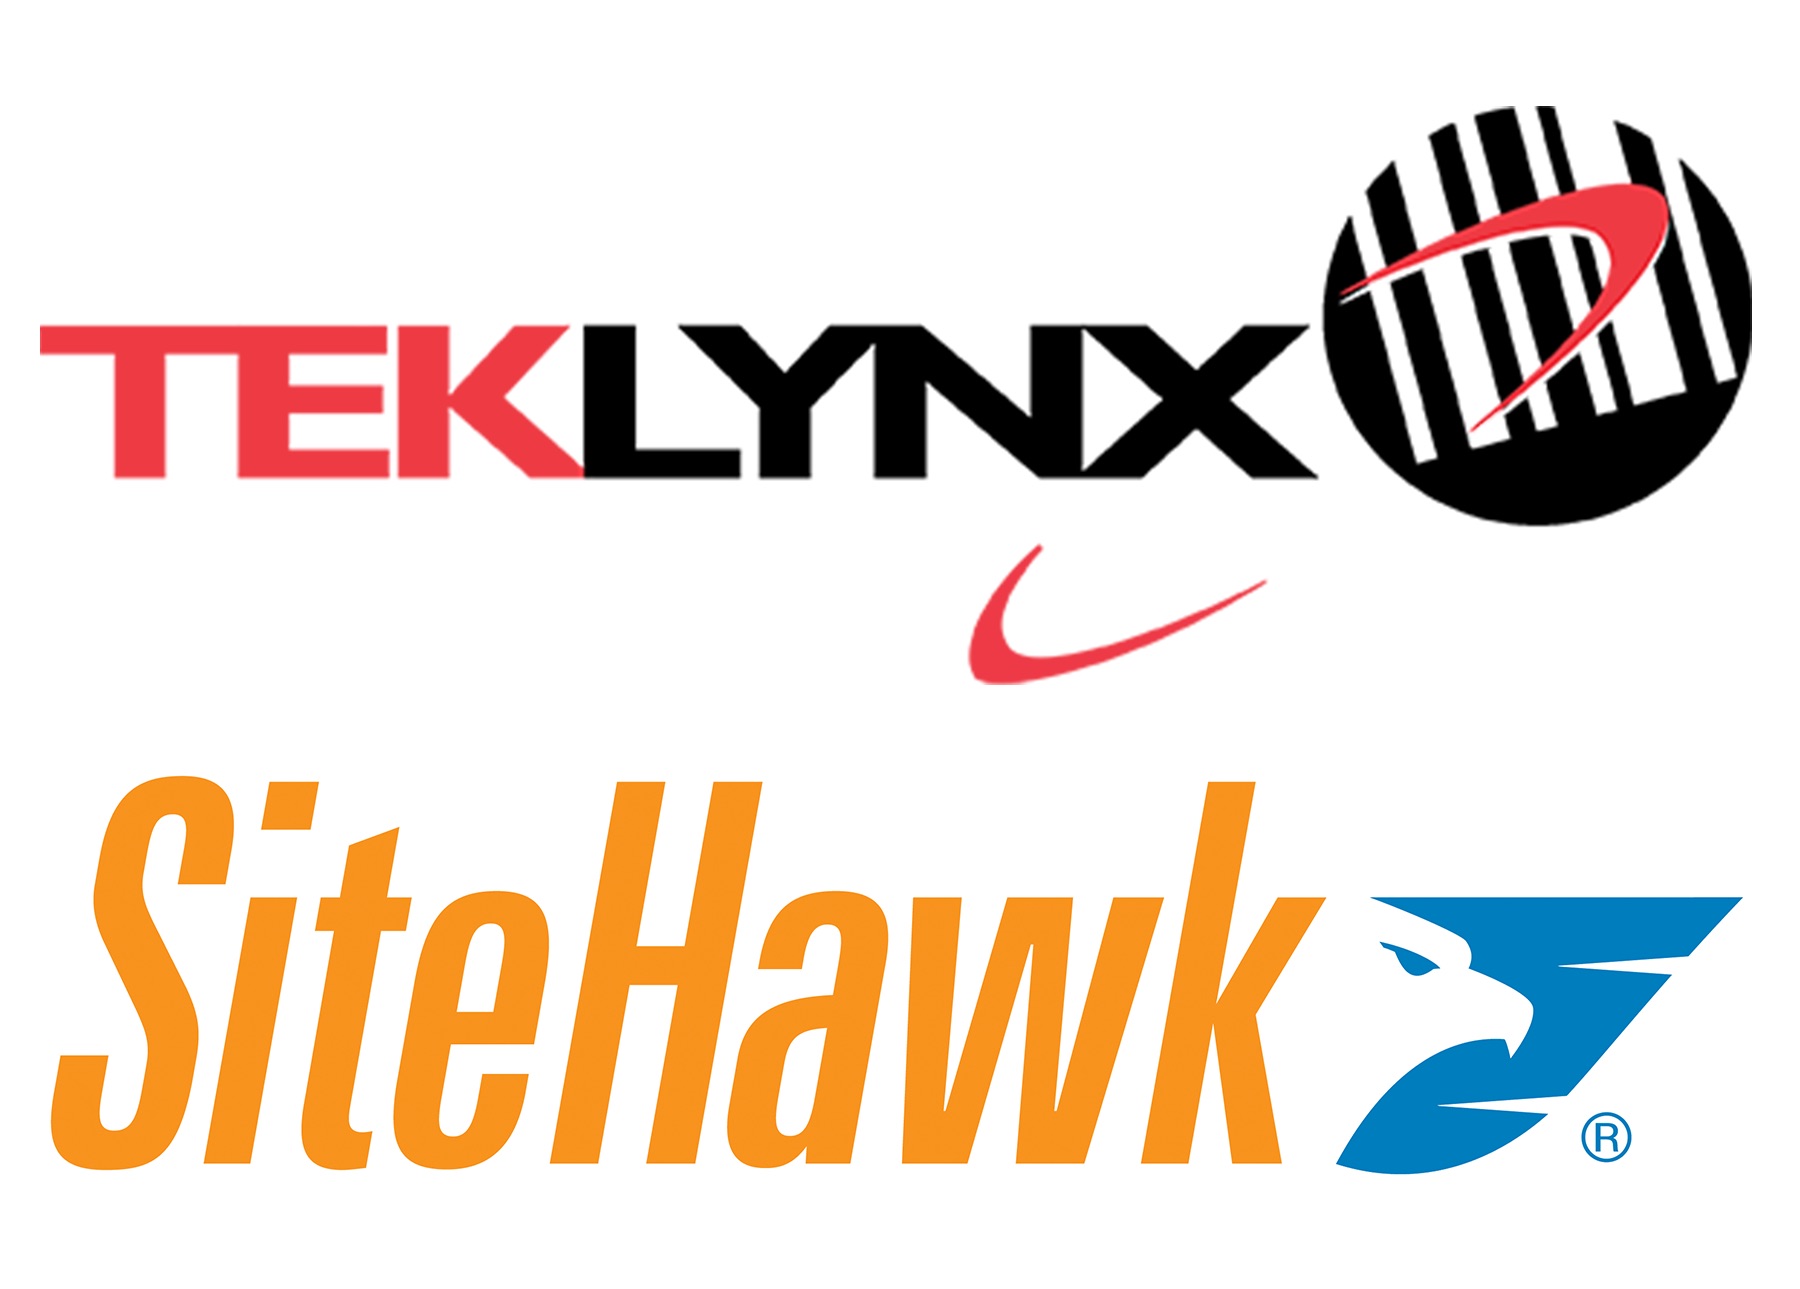 TEKLYNX SiteHawk partnership logo